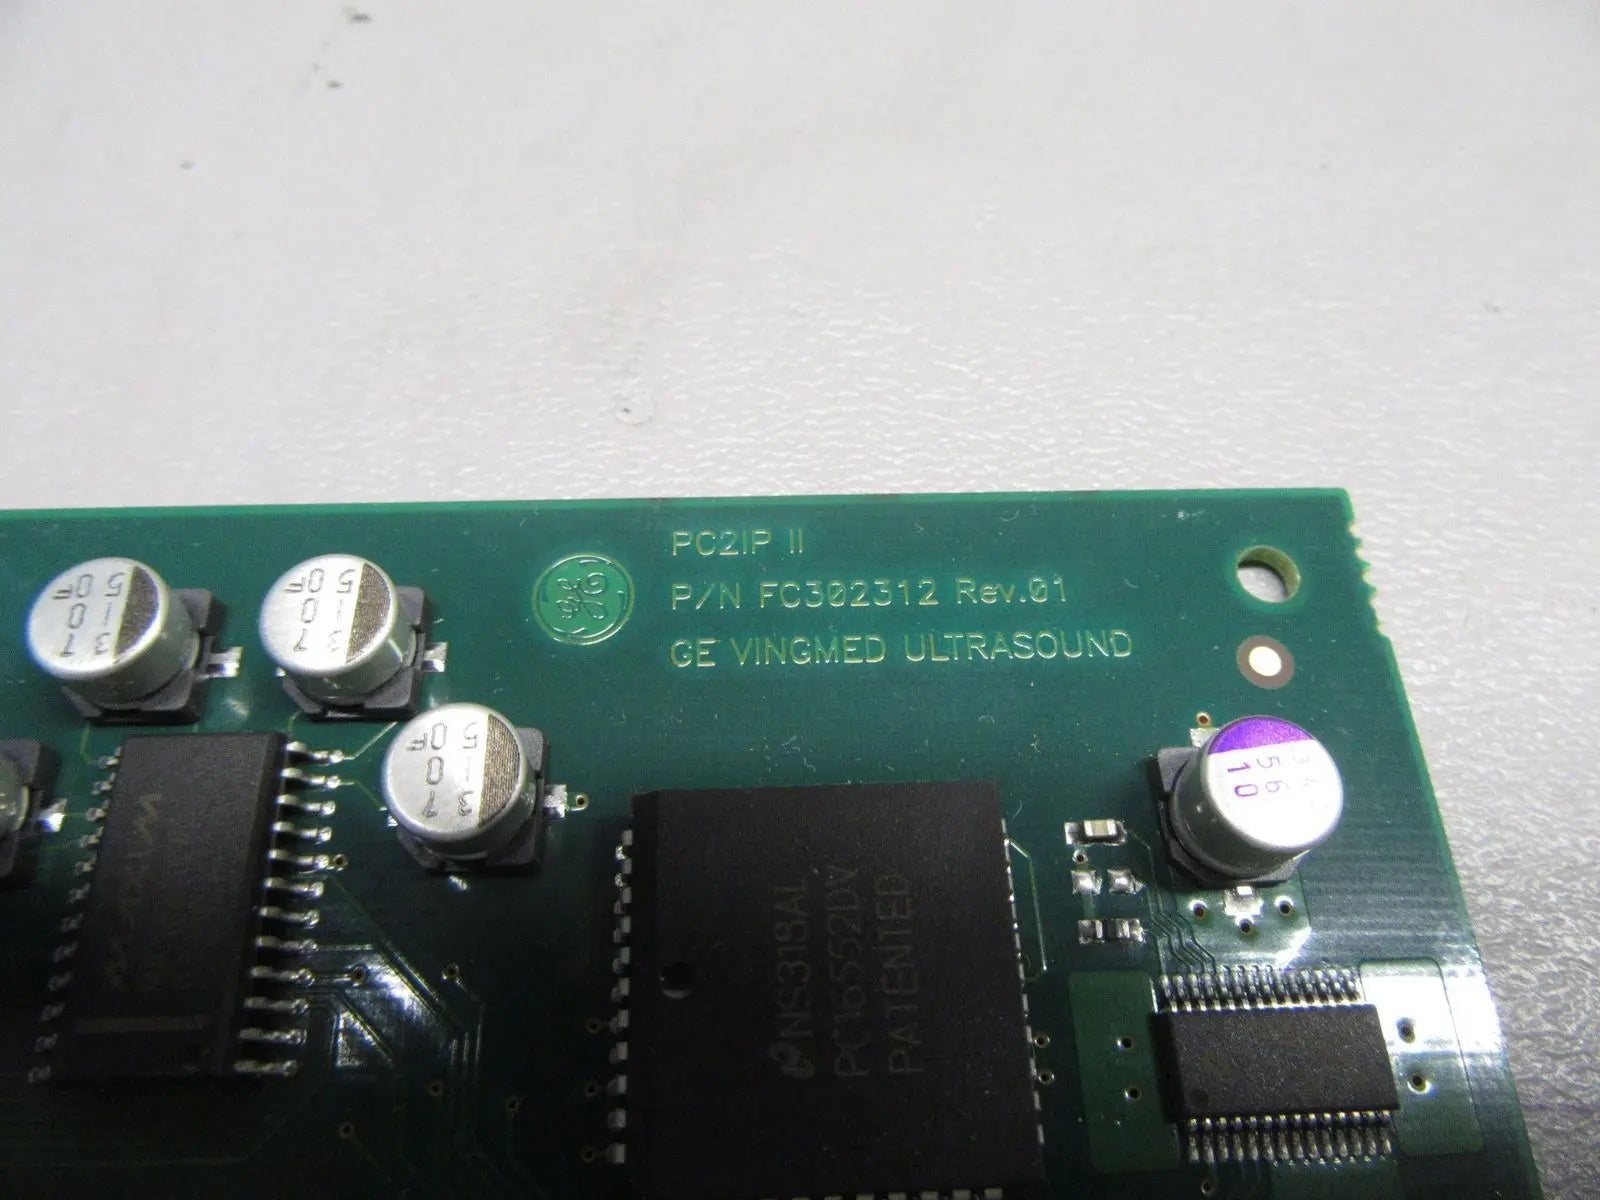 FC302312 Rev.01 PC21P IIB Board For GE Vivid 3 Ultrasound Machine